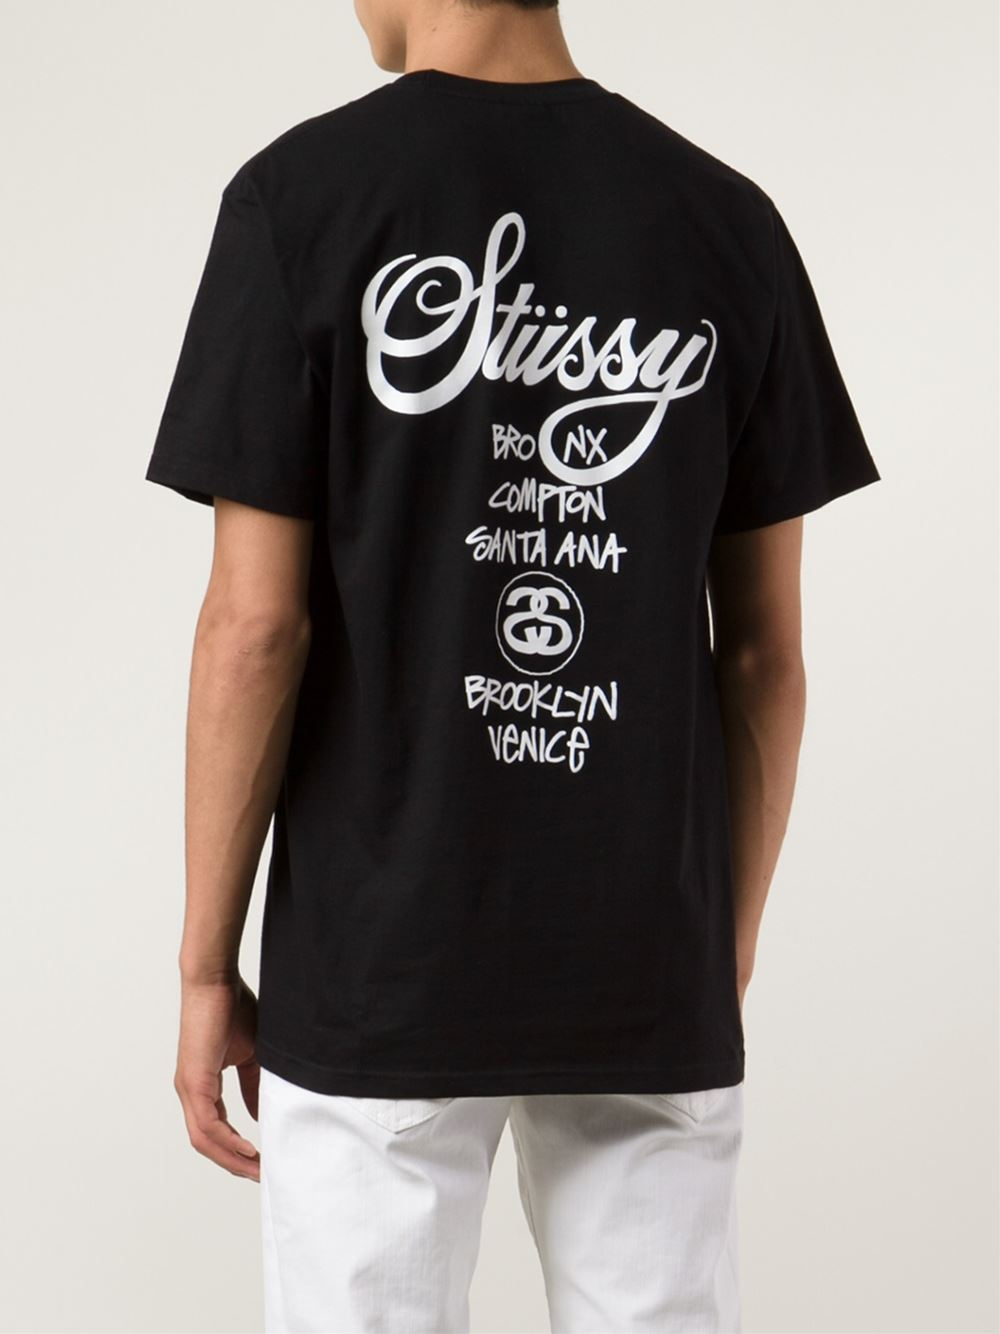 Stussy Cotton 'World Tour' T-Shirt in Black for Men - Lyst